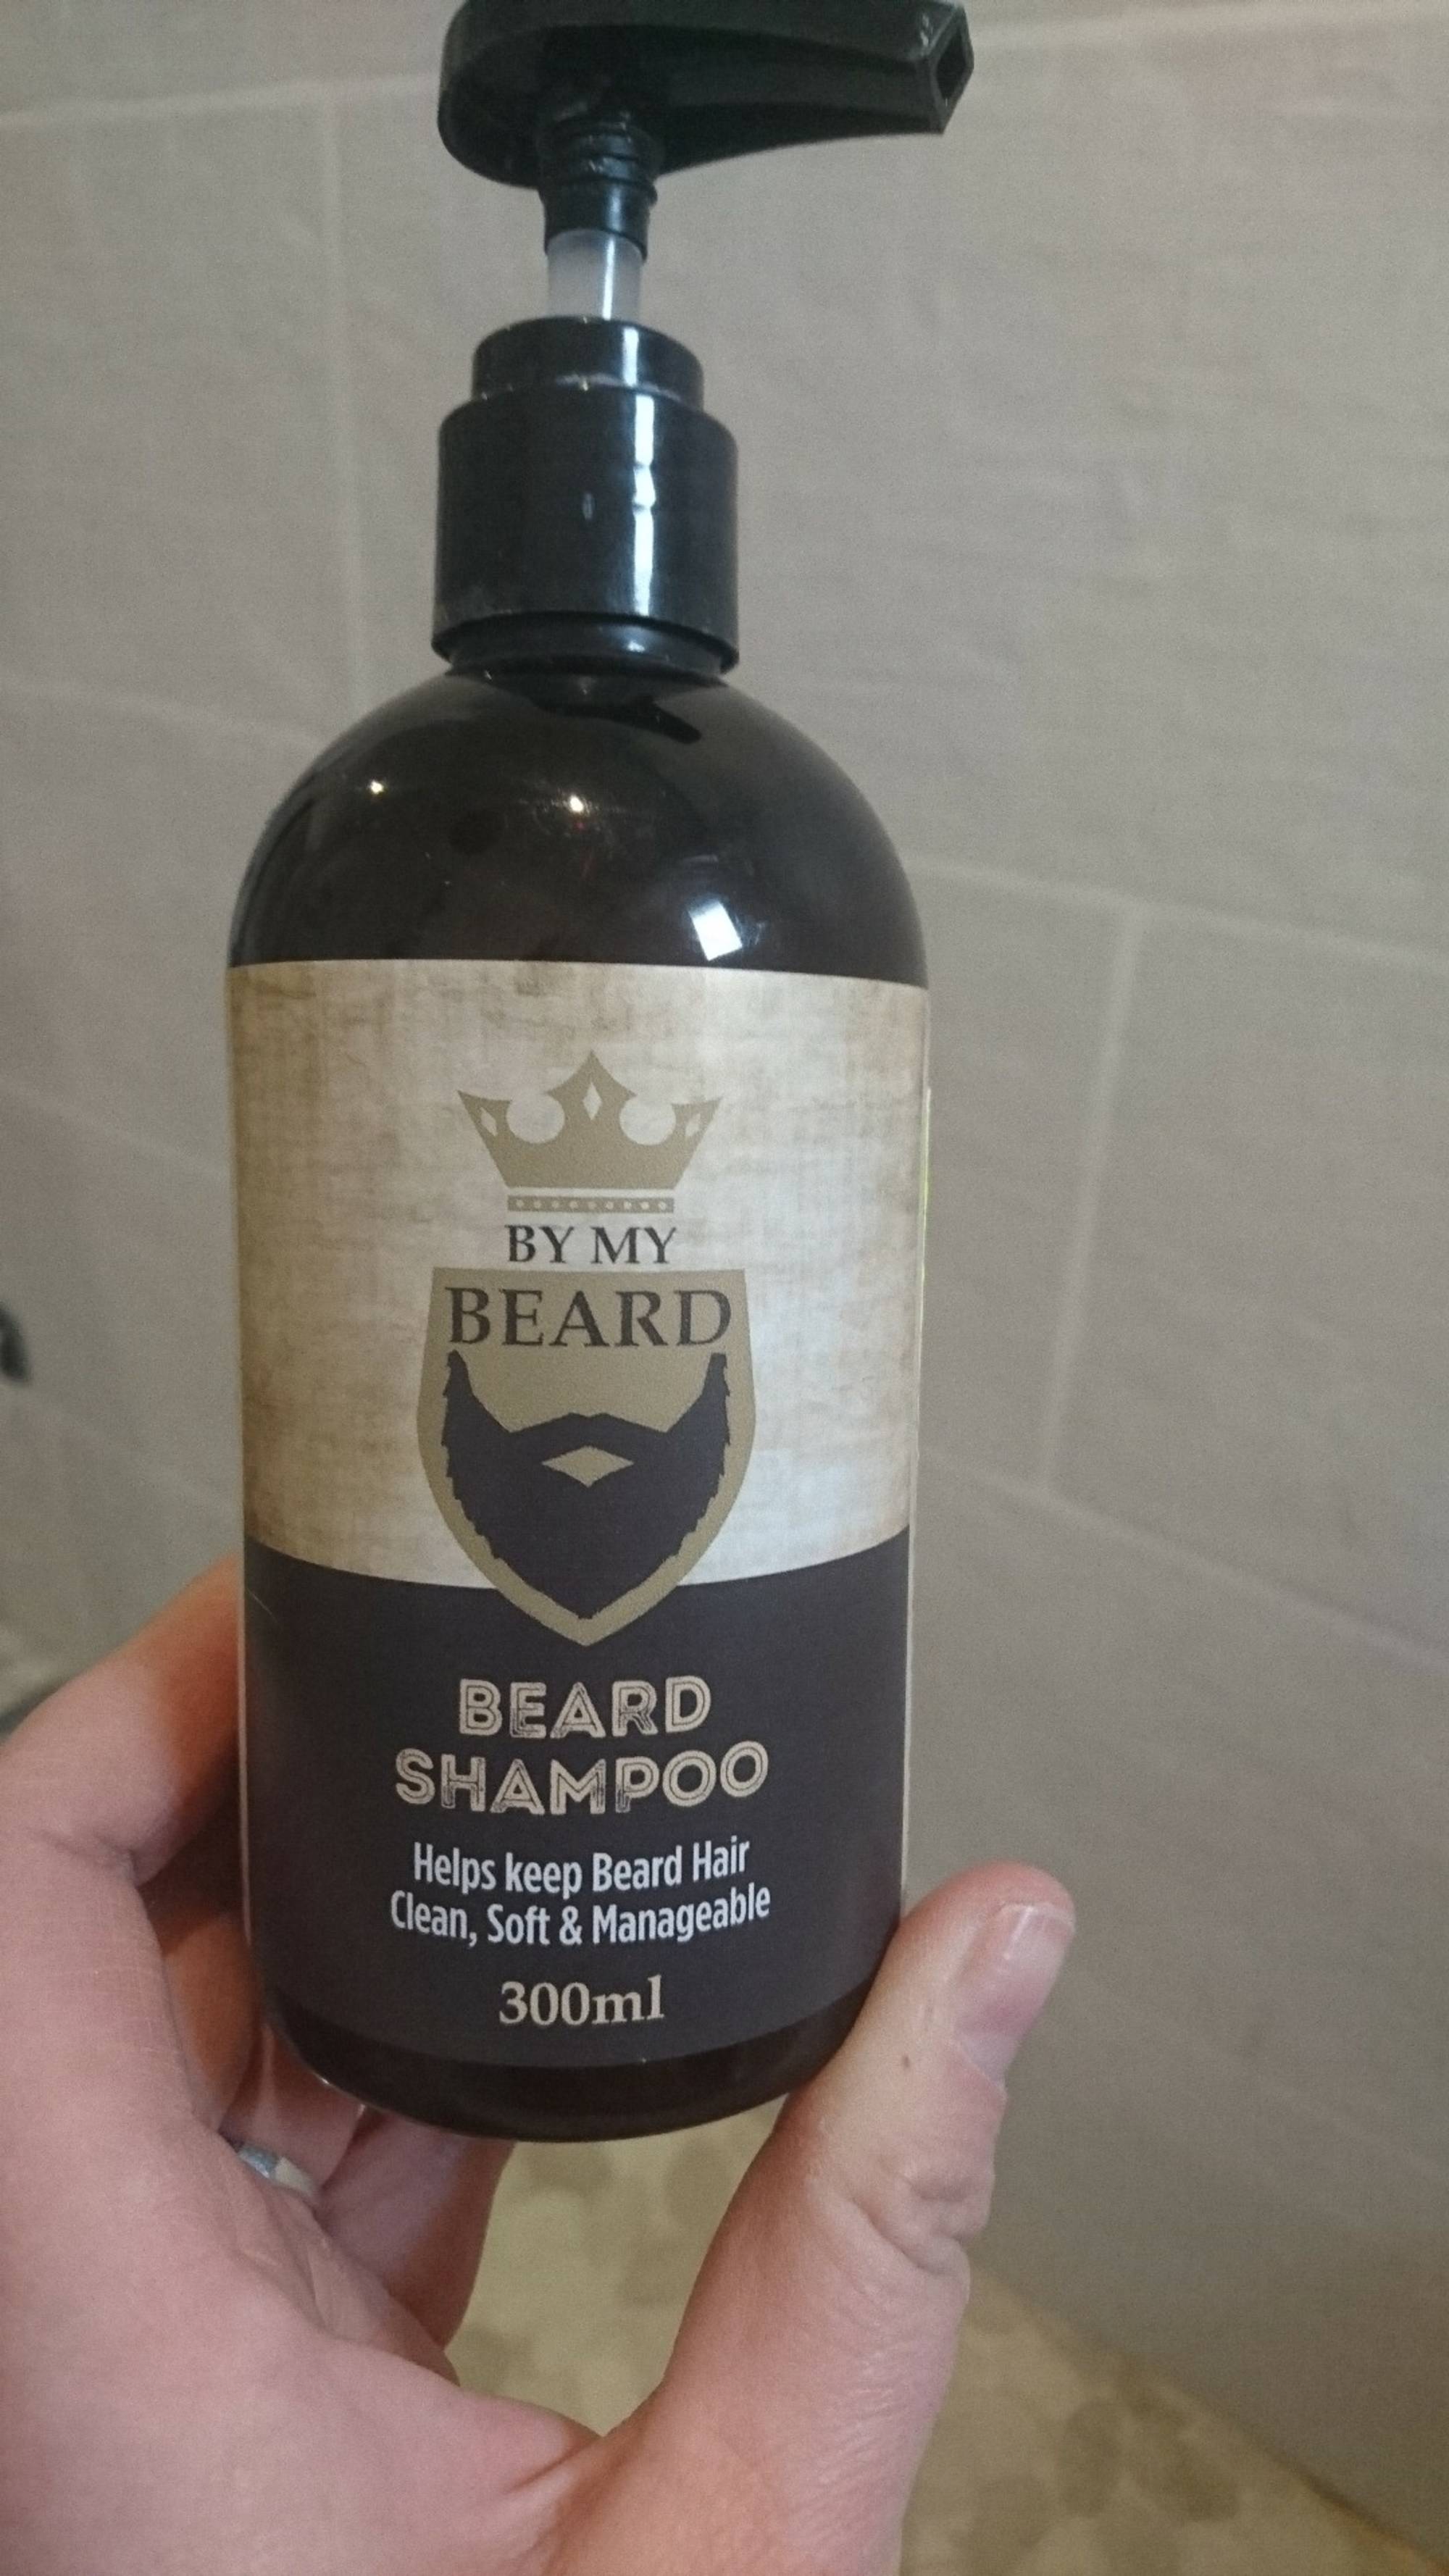 BY MY BEARD - Beard shampoo